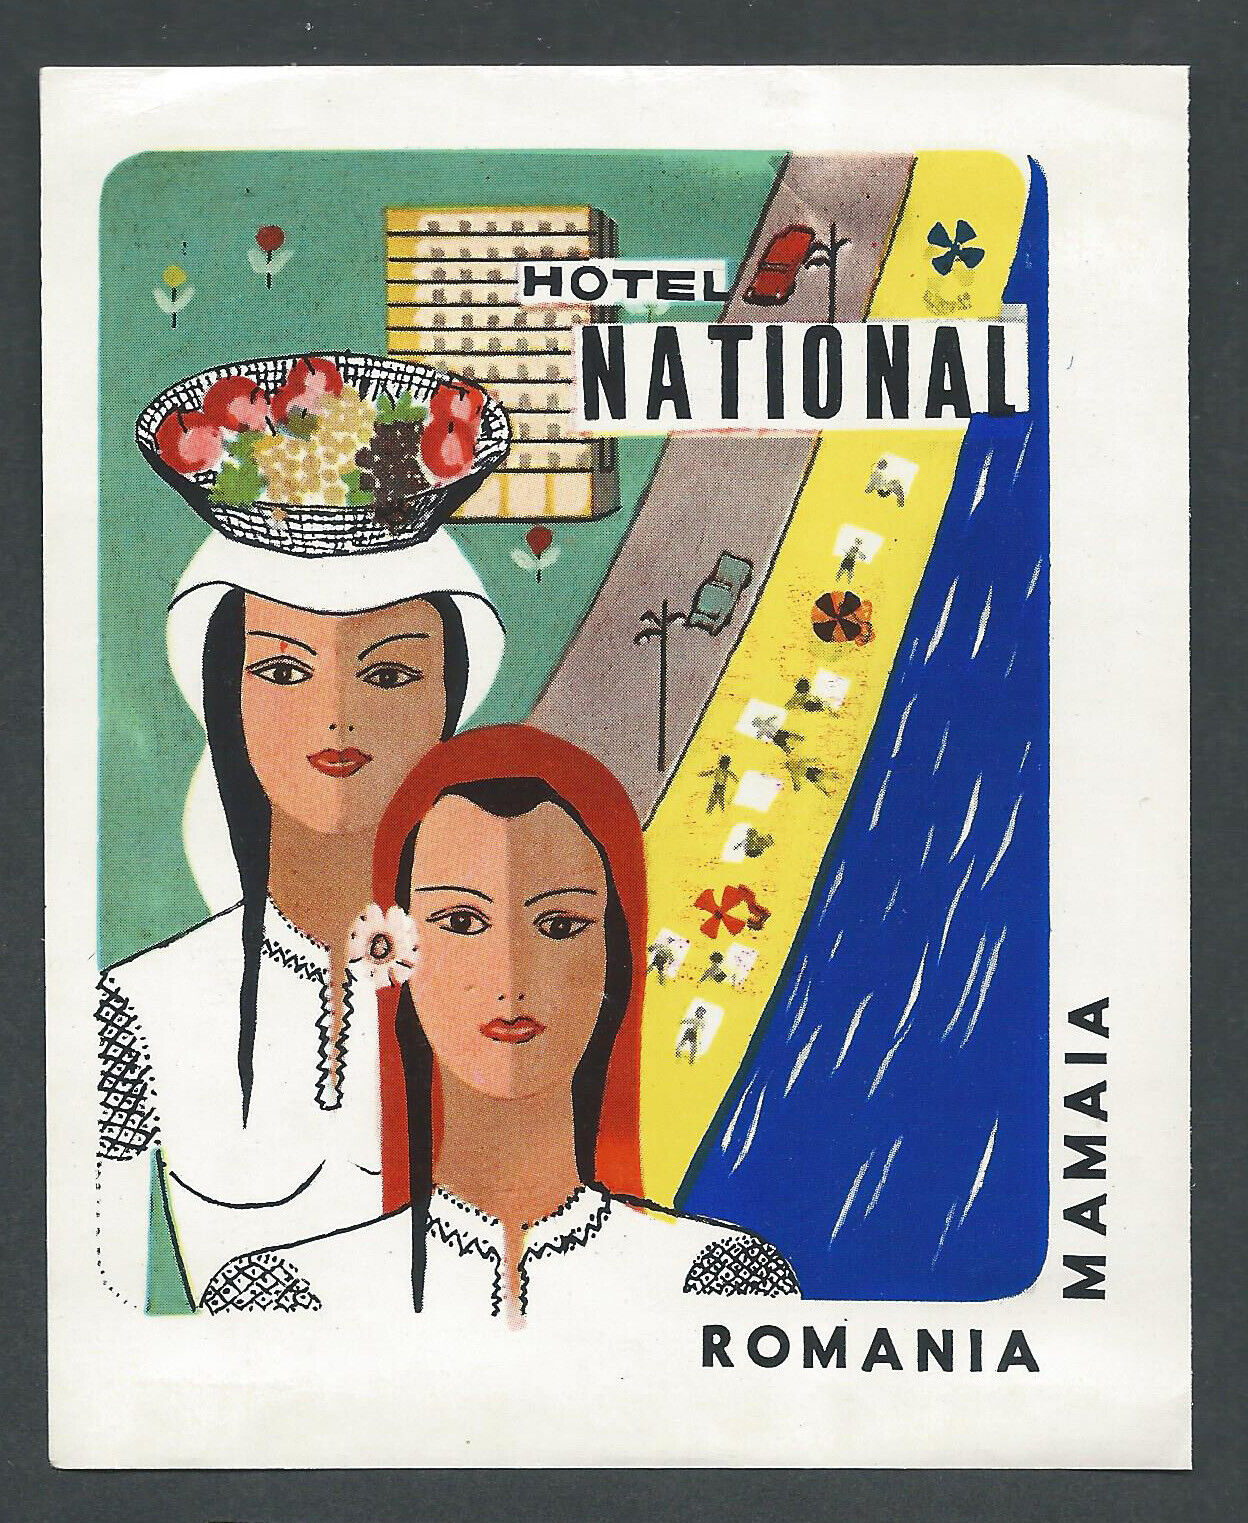 Hotel National MAMAIA Romania - vintage luggage label